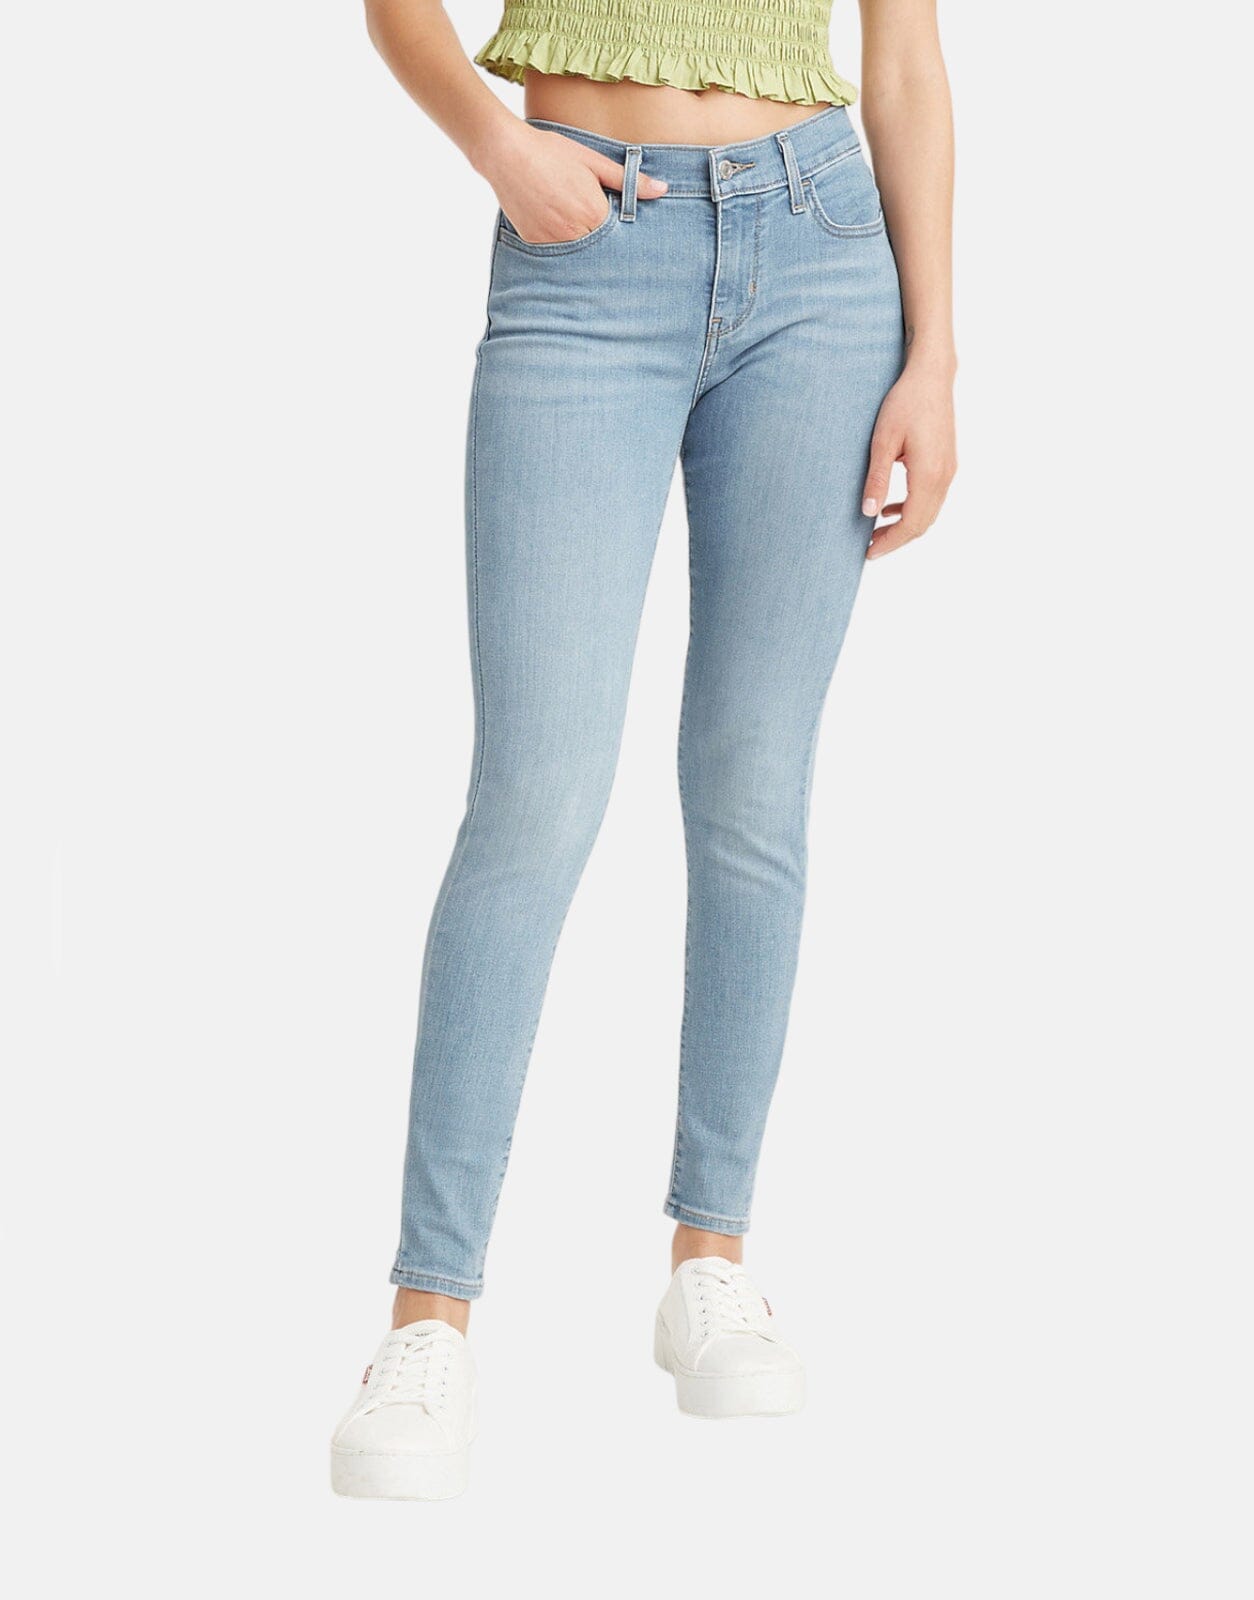 Levi's 710 Super Skinny Ontario Summer Jeans - Subwear